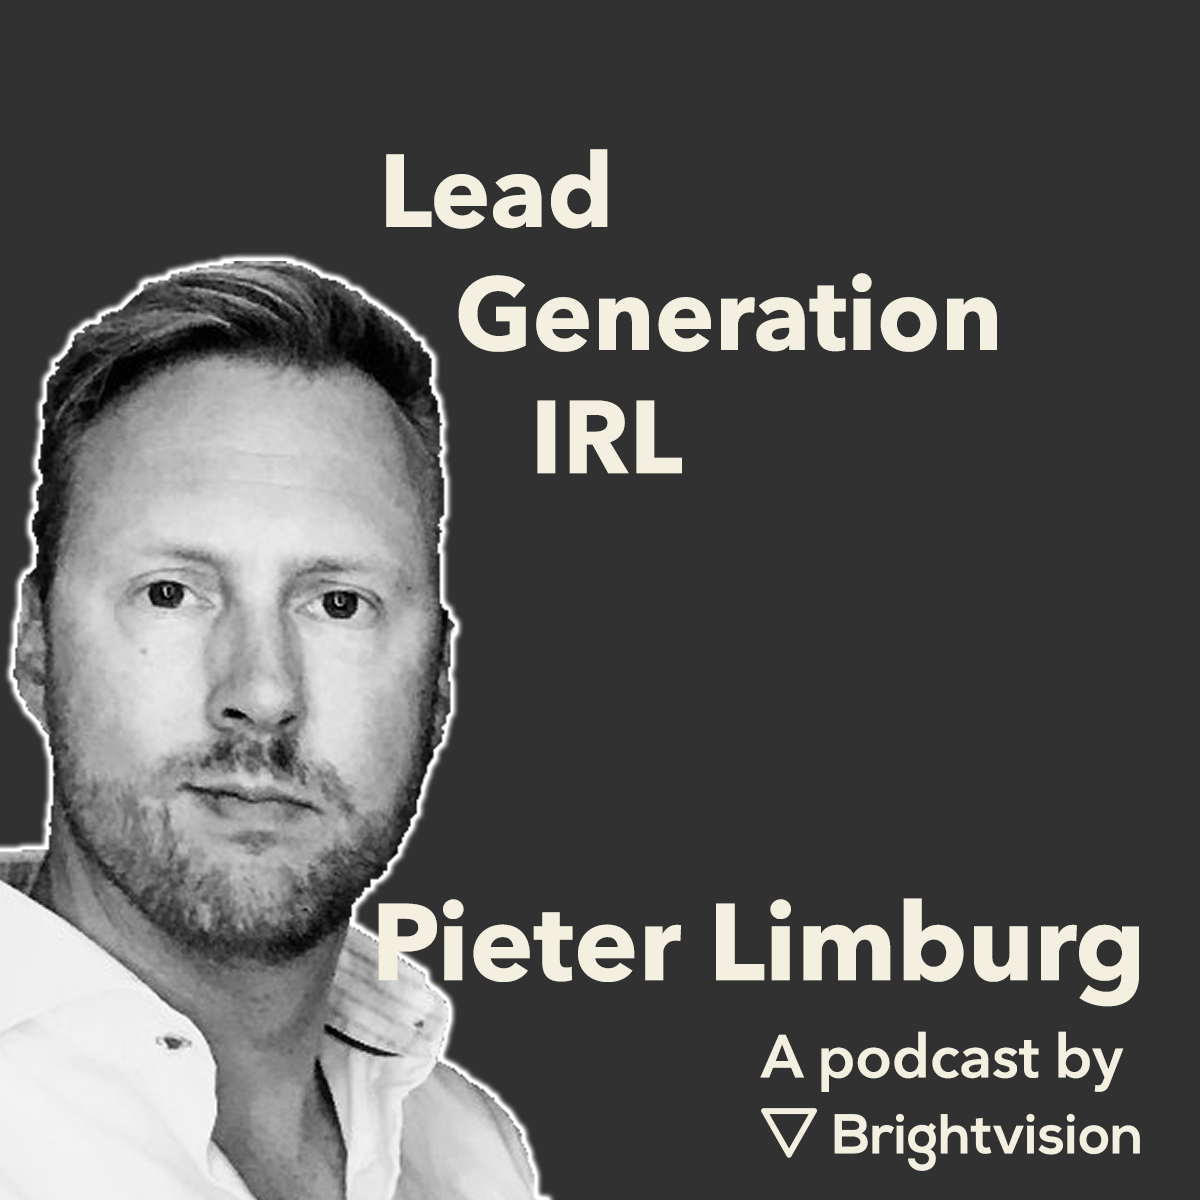 Lead Generation IRL - Pieter Limburg